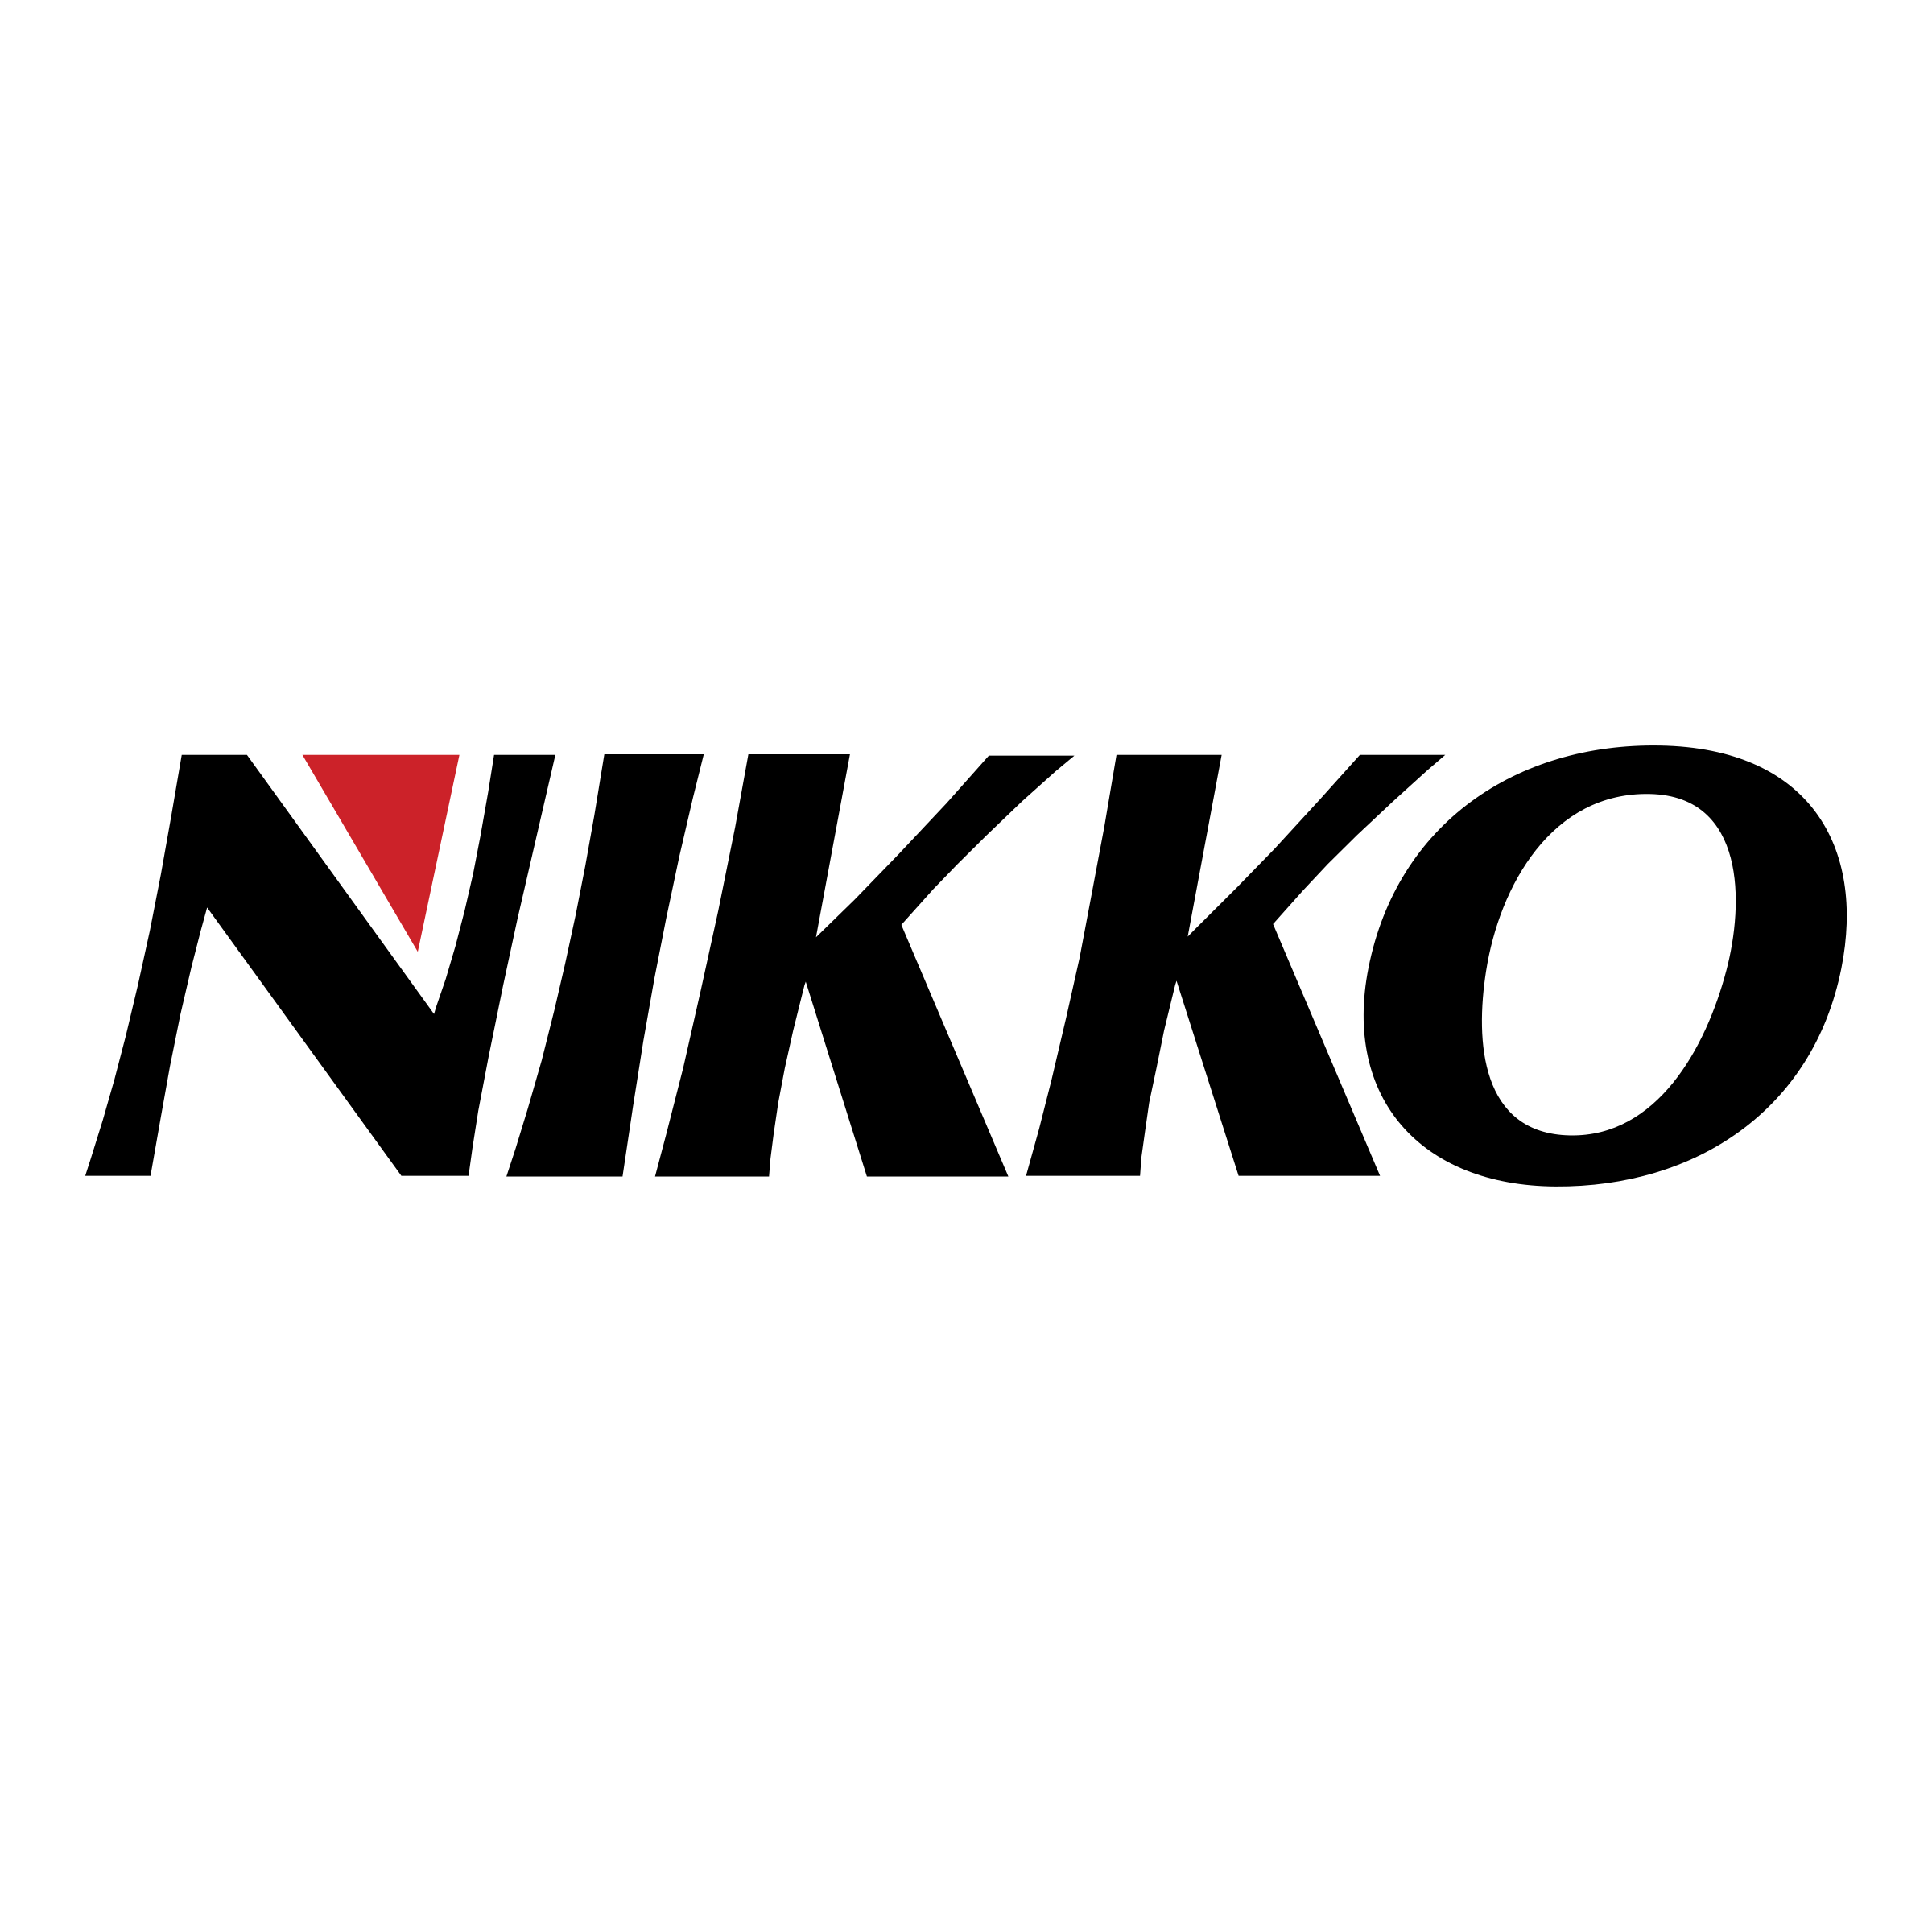 nikko-1-logo-png-transparent